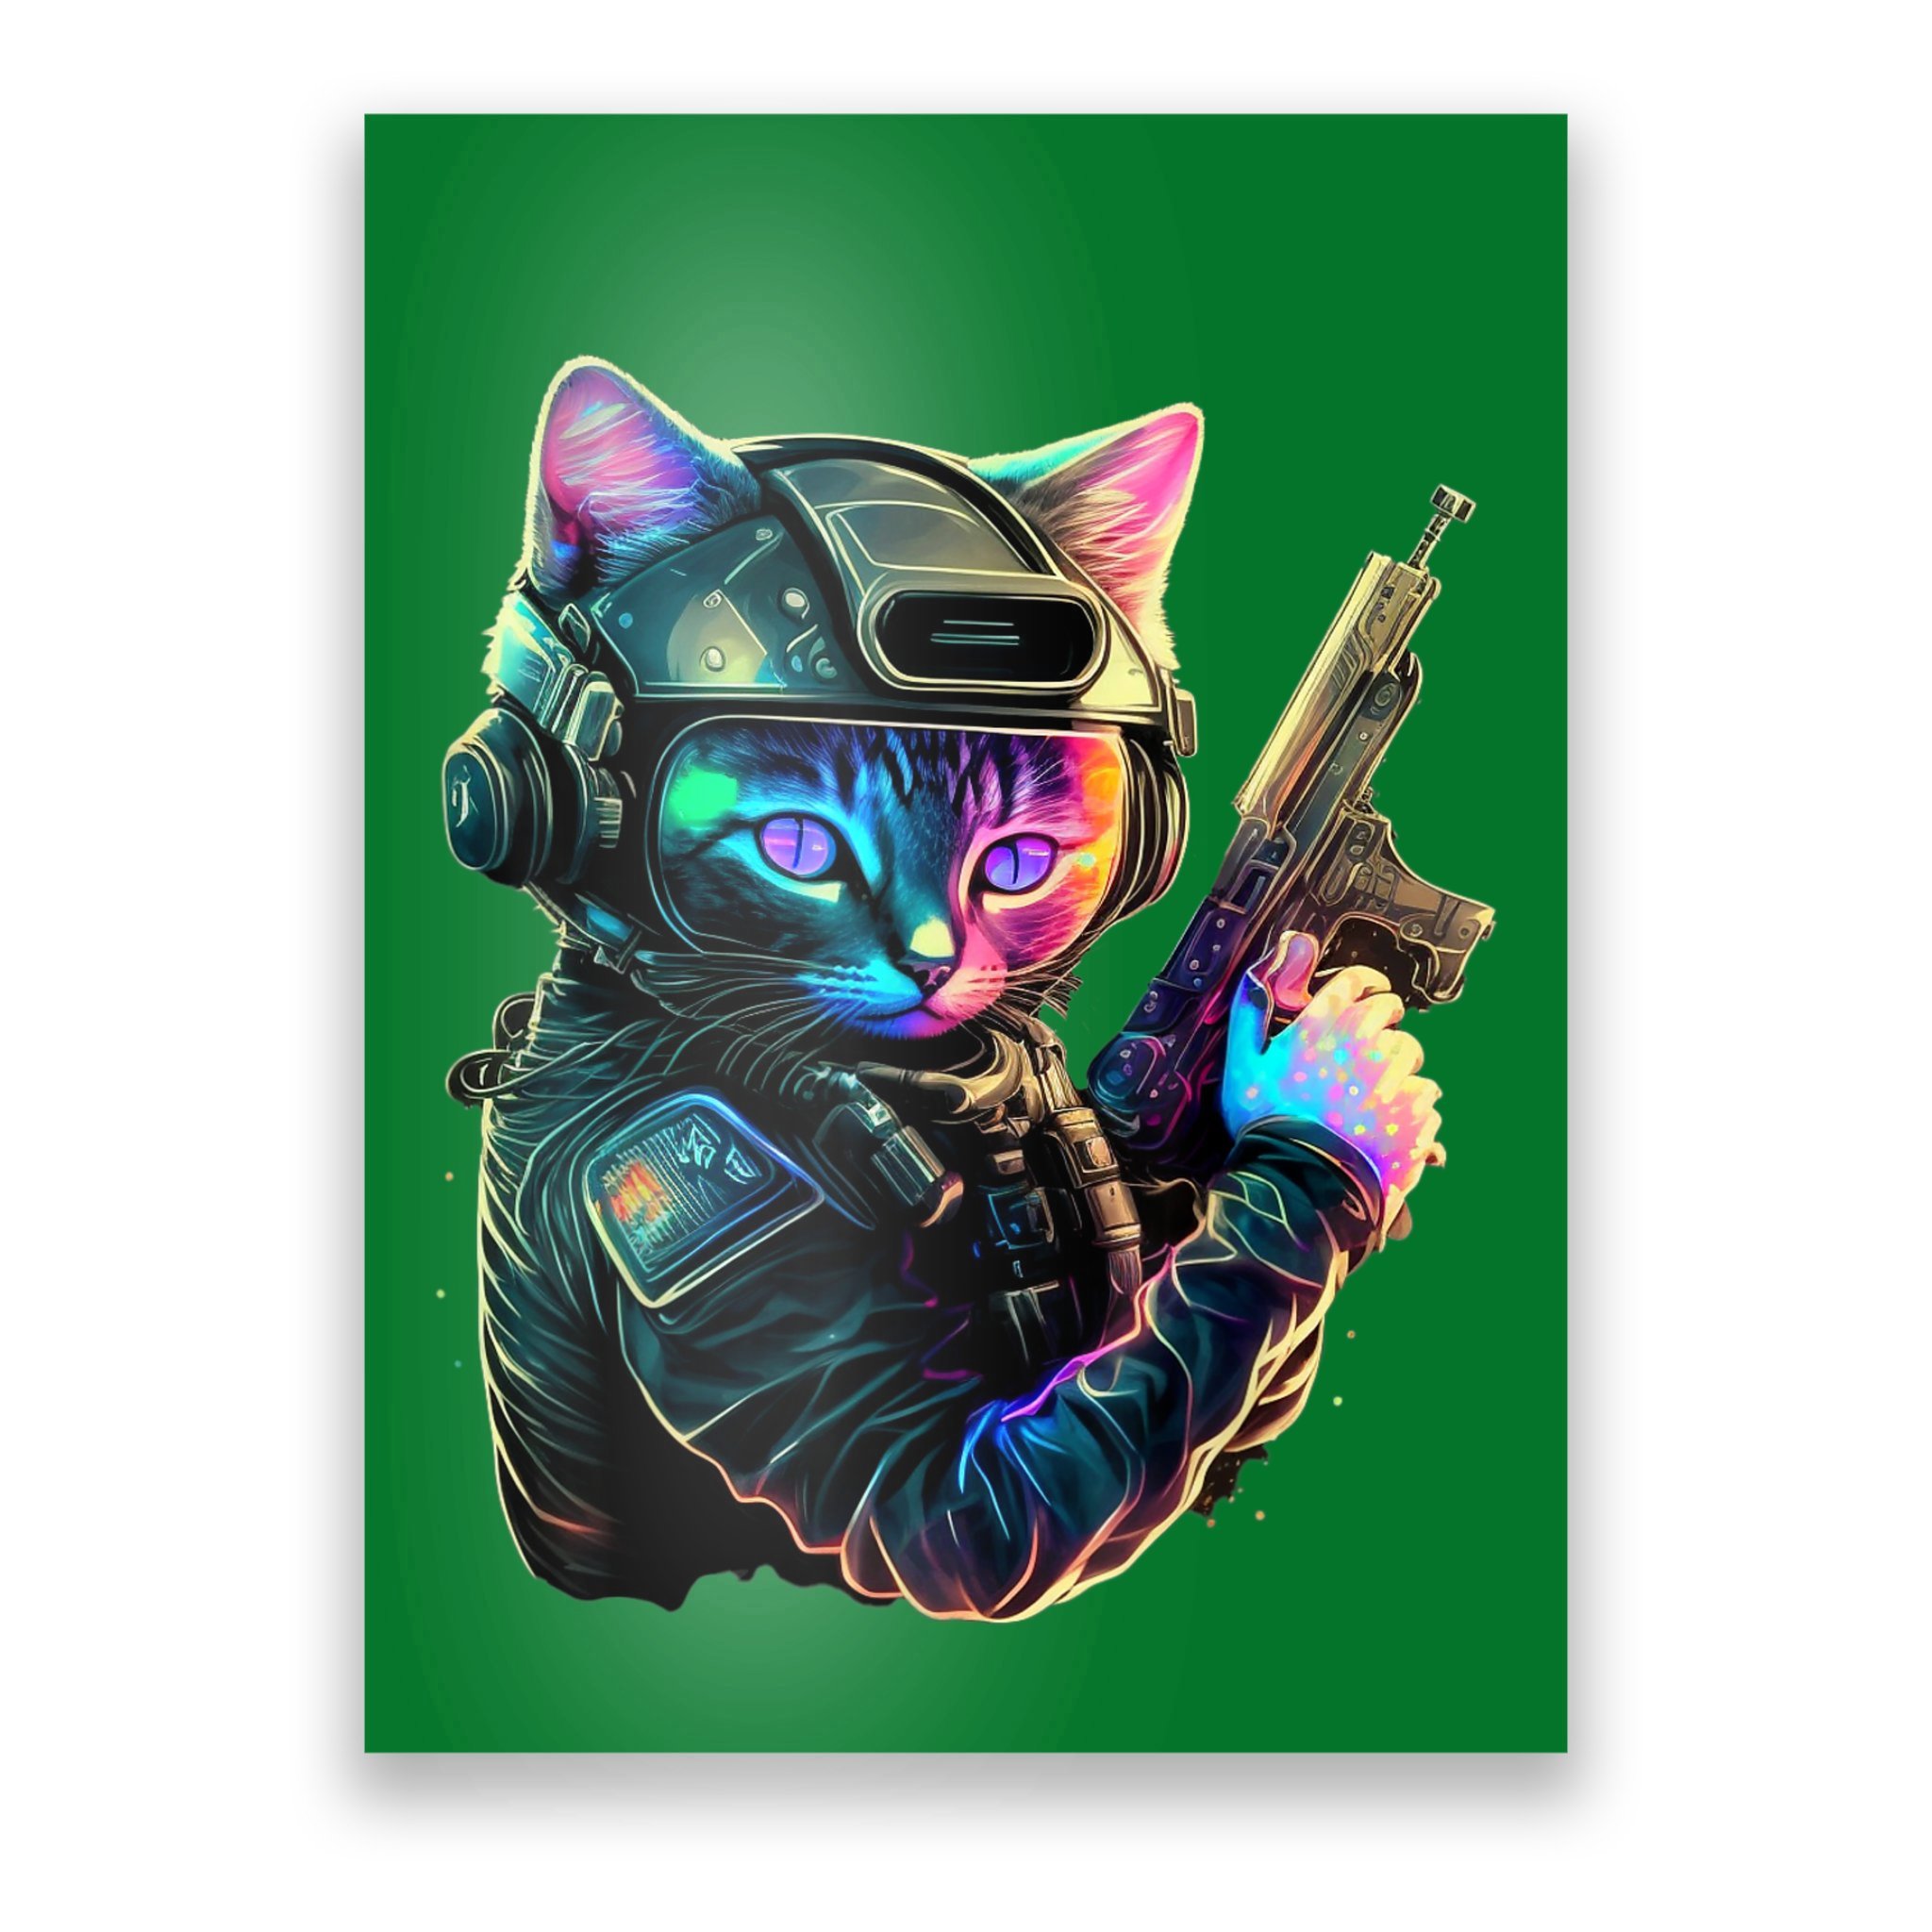 cat with gun wallpaper